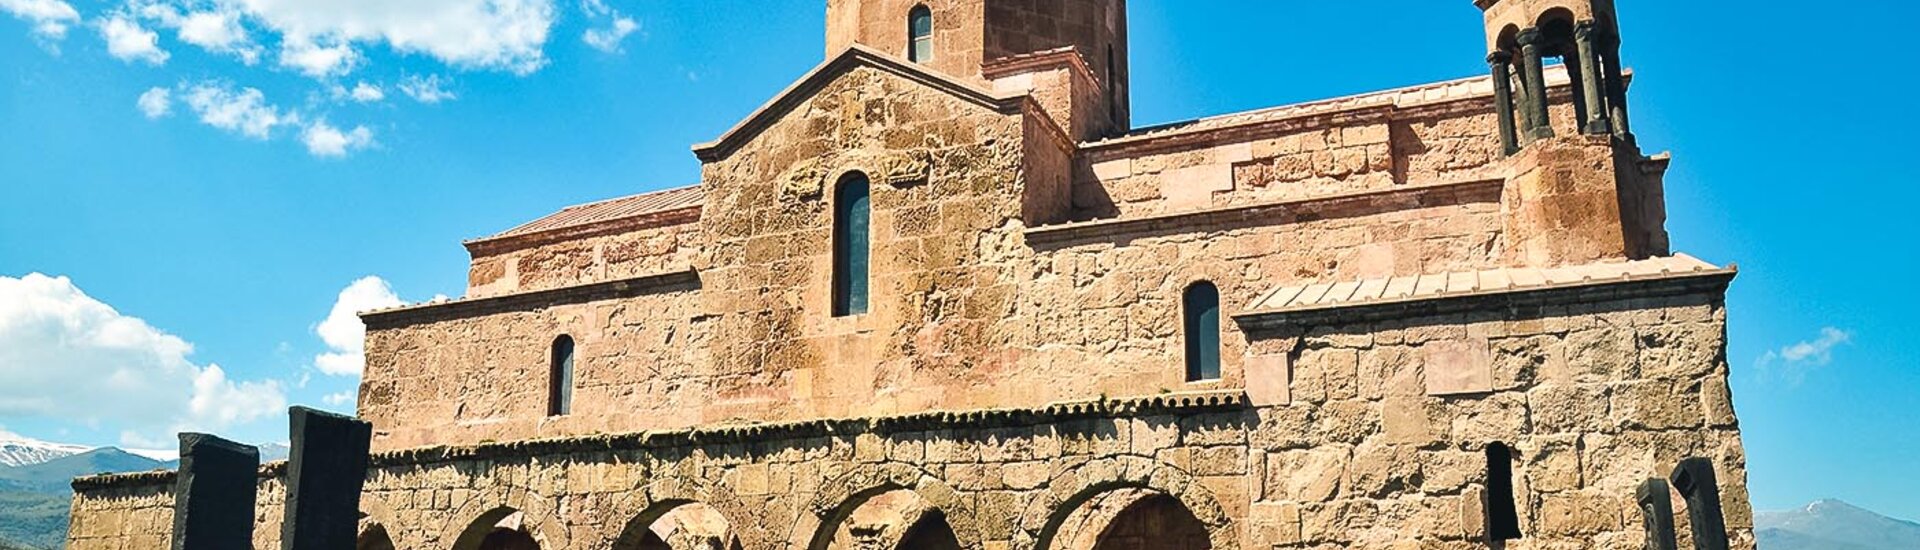 Odsun Kathedrale in Armenien